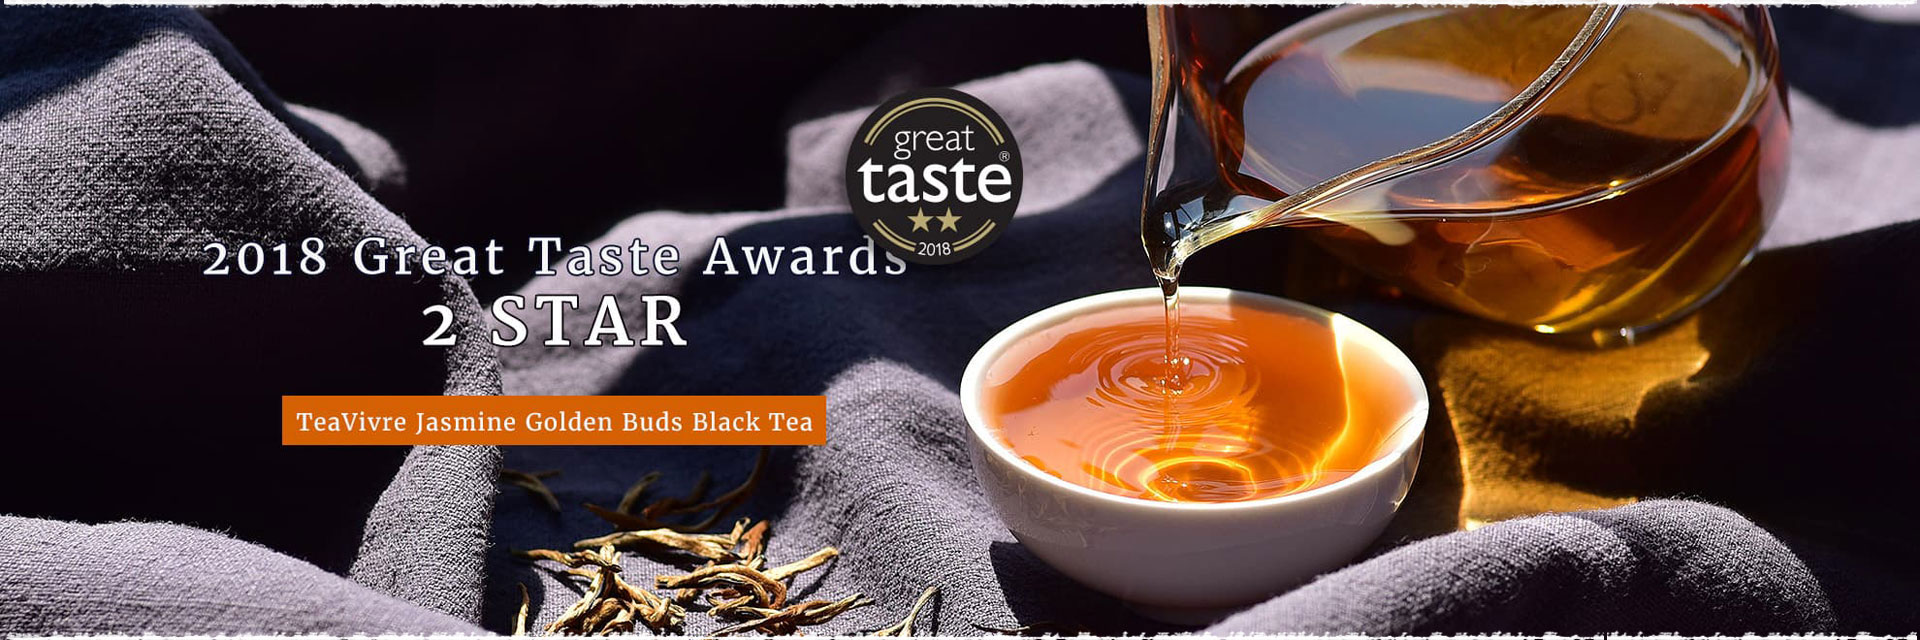 TeaVivre Jasmine Golden Buds Black Tea wins Great Taste Award 2 Star 2018